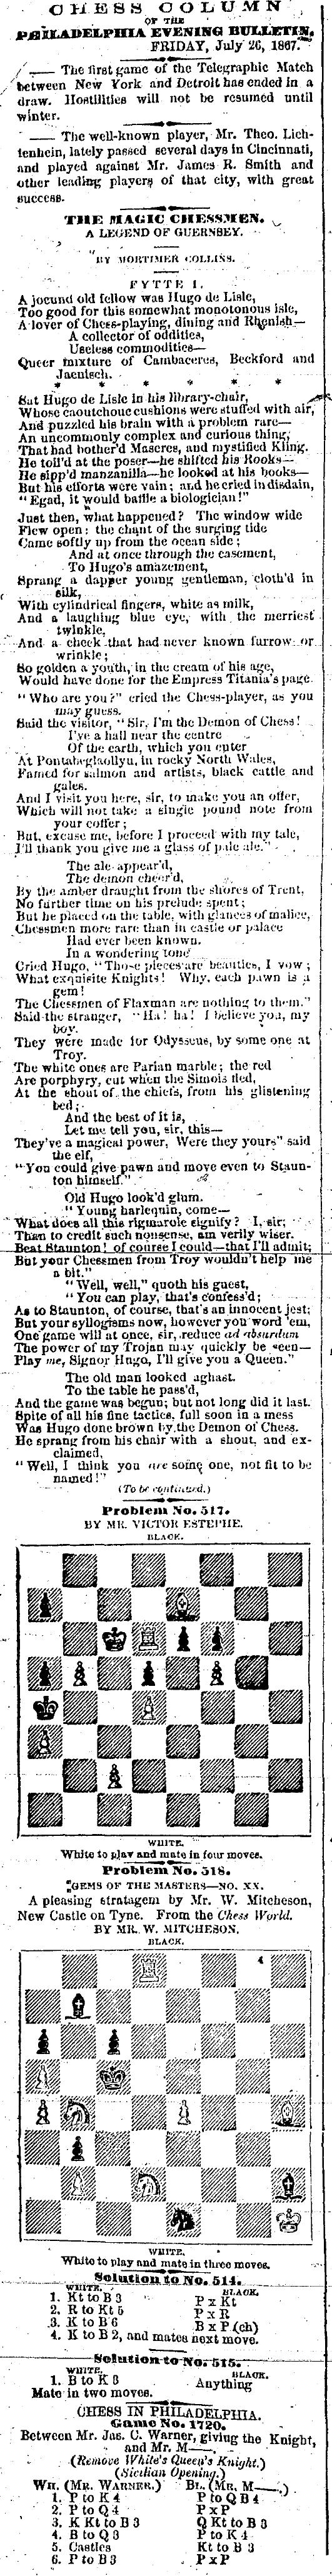 1867.07.26-01 Philadelphia Daily Evening Bulletin.jpg